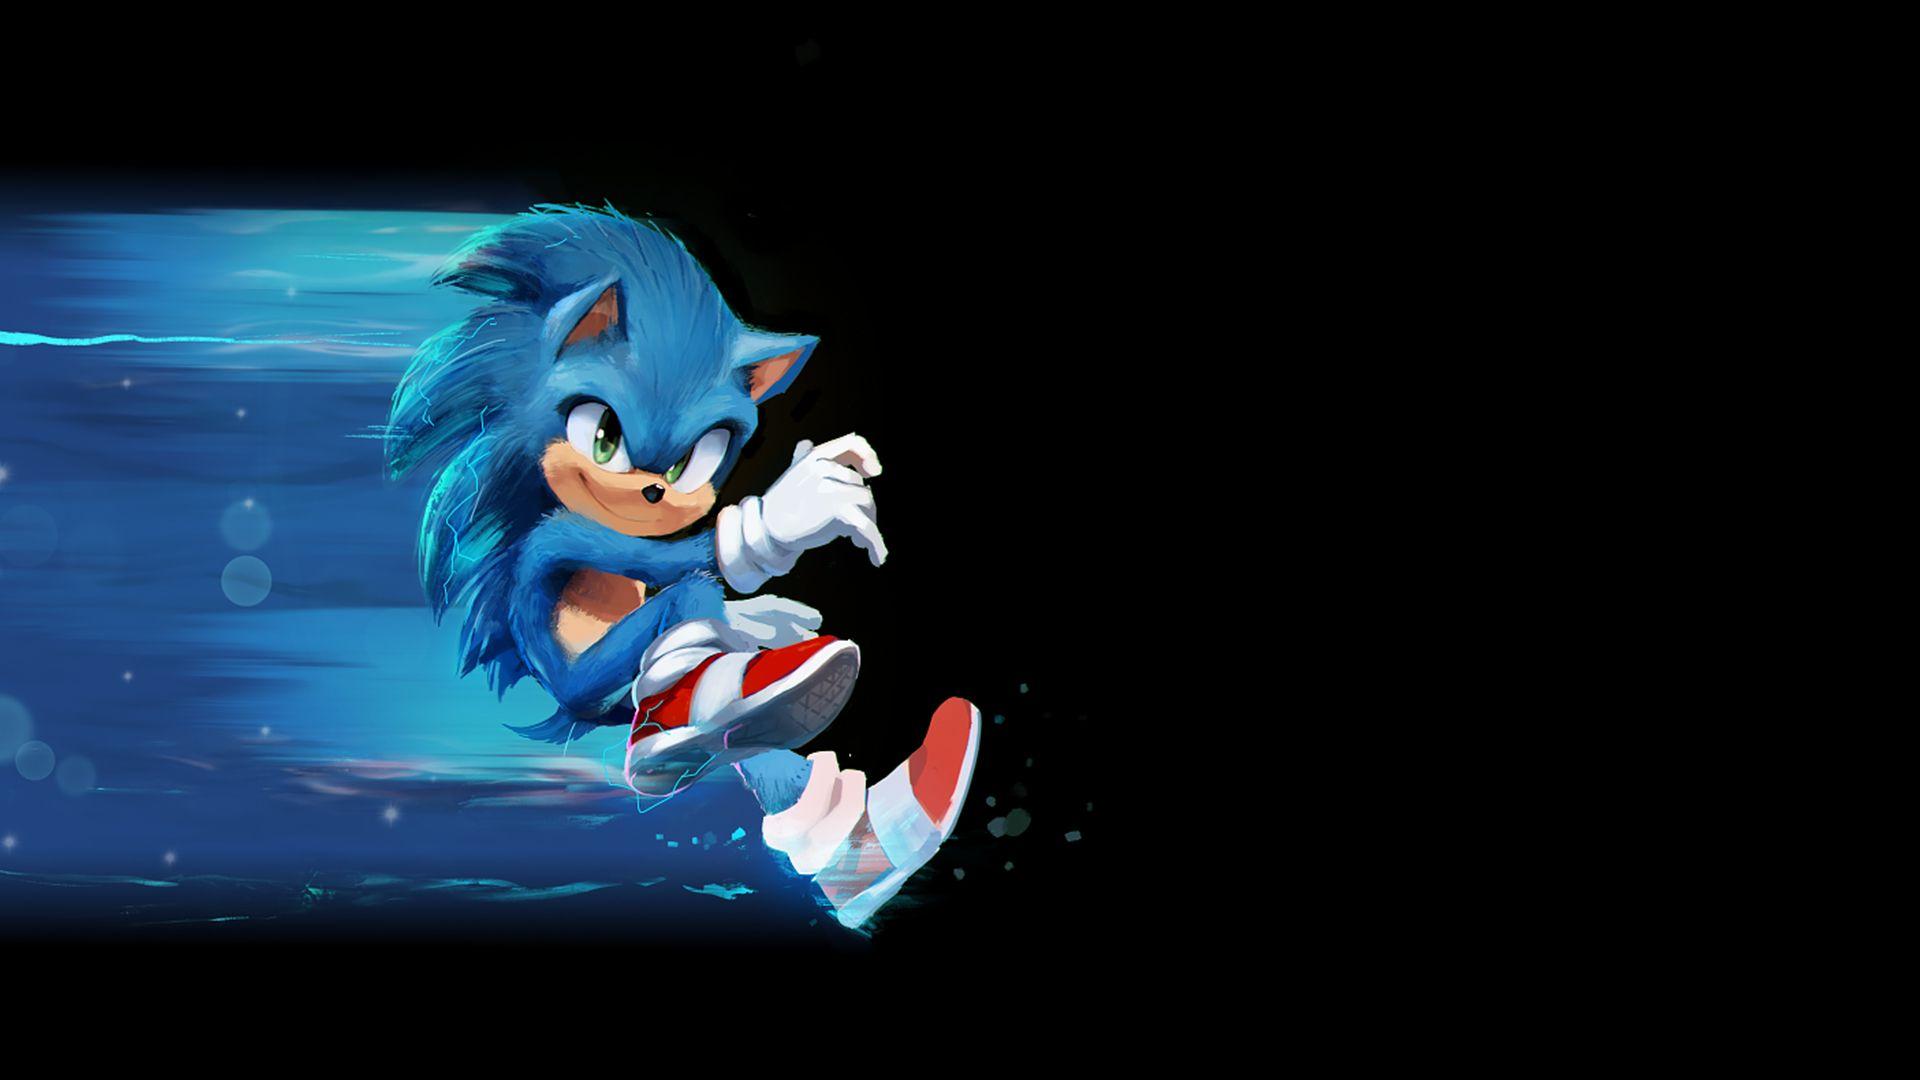 Sonic The Hedgehog 4k Wallpapers Top Free Sonic The Hedgehog 4k